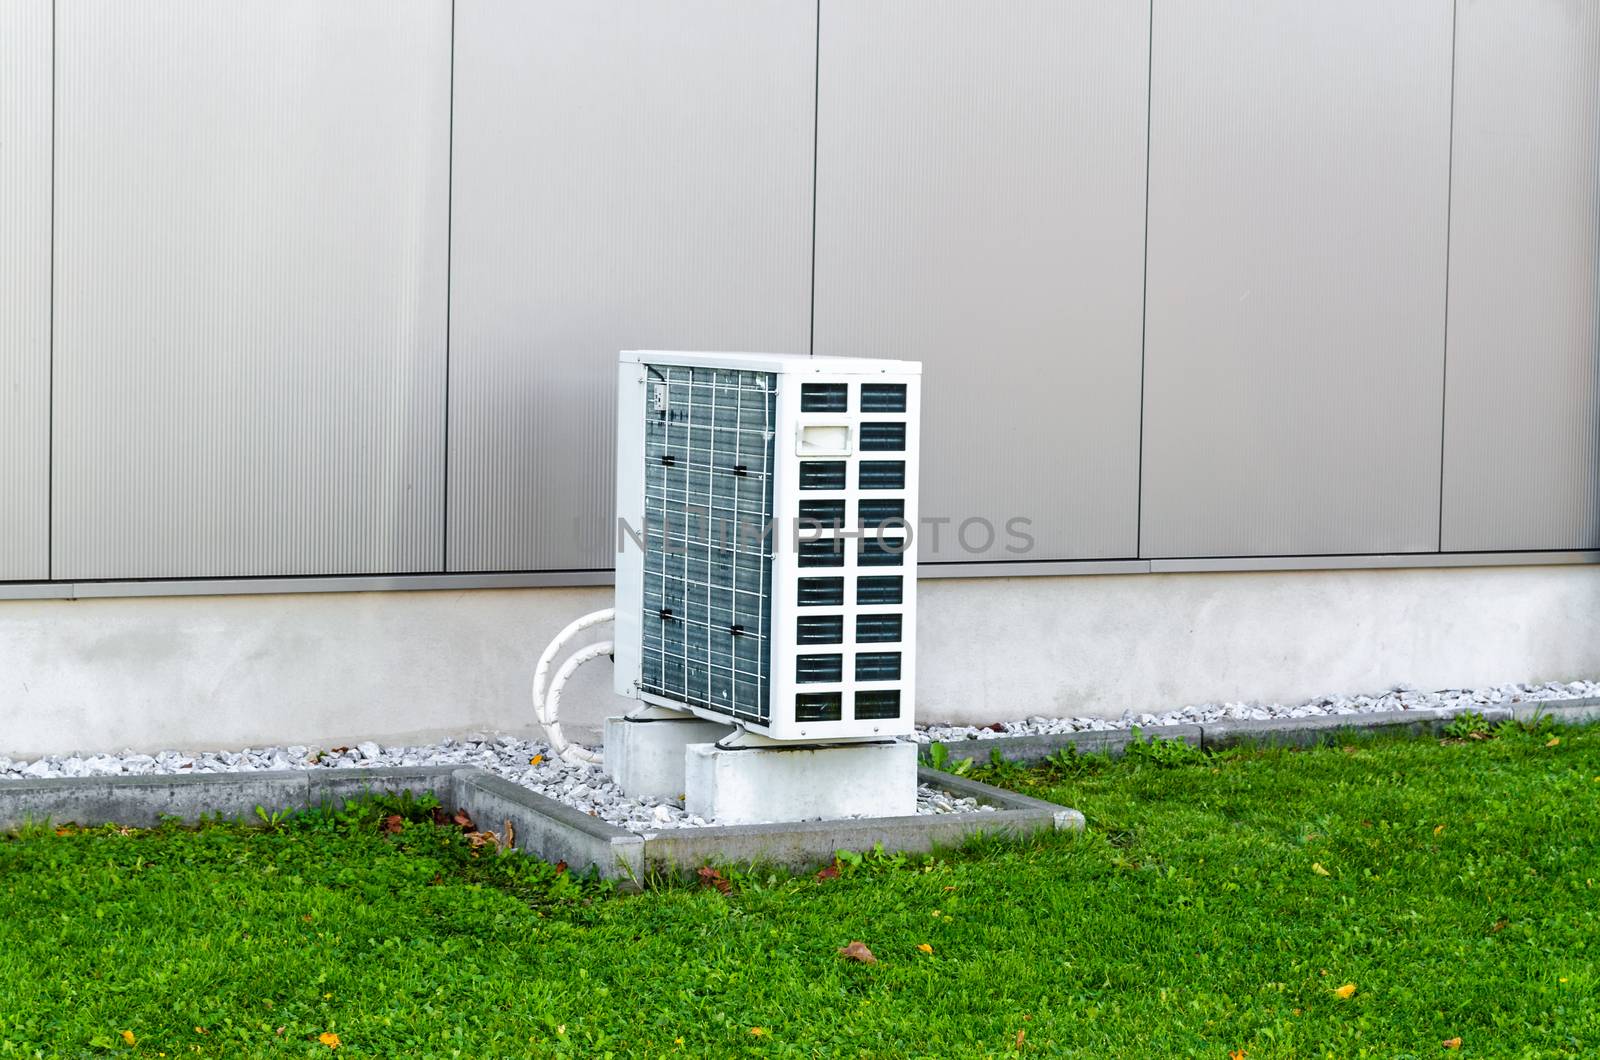 Air heat pump from an industrial building. The outdoor unit heat pump, air to air